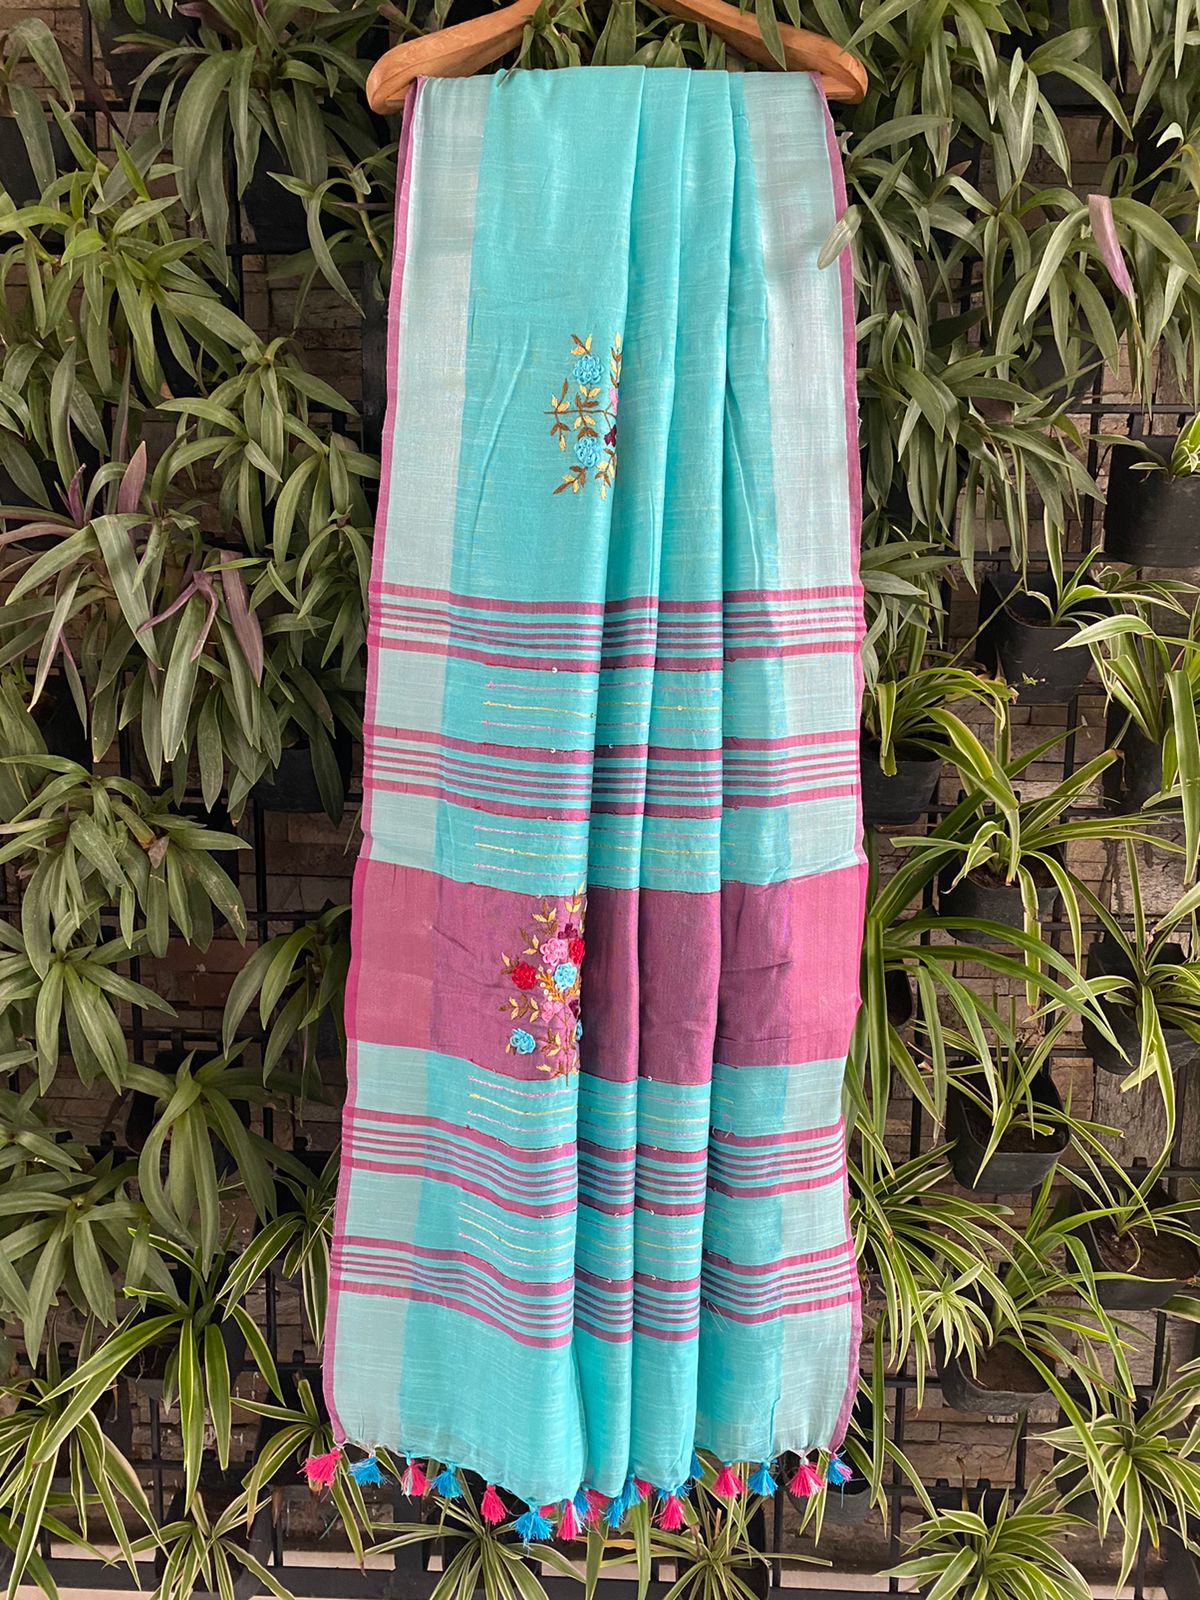 Woven dreams silk linen floral embroidery saree - Blue & plum